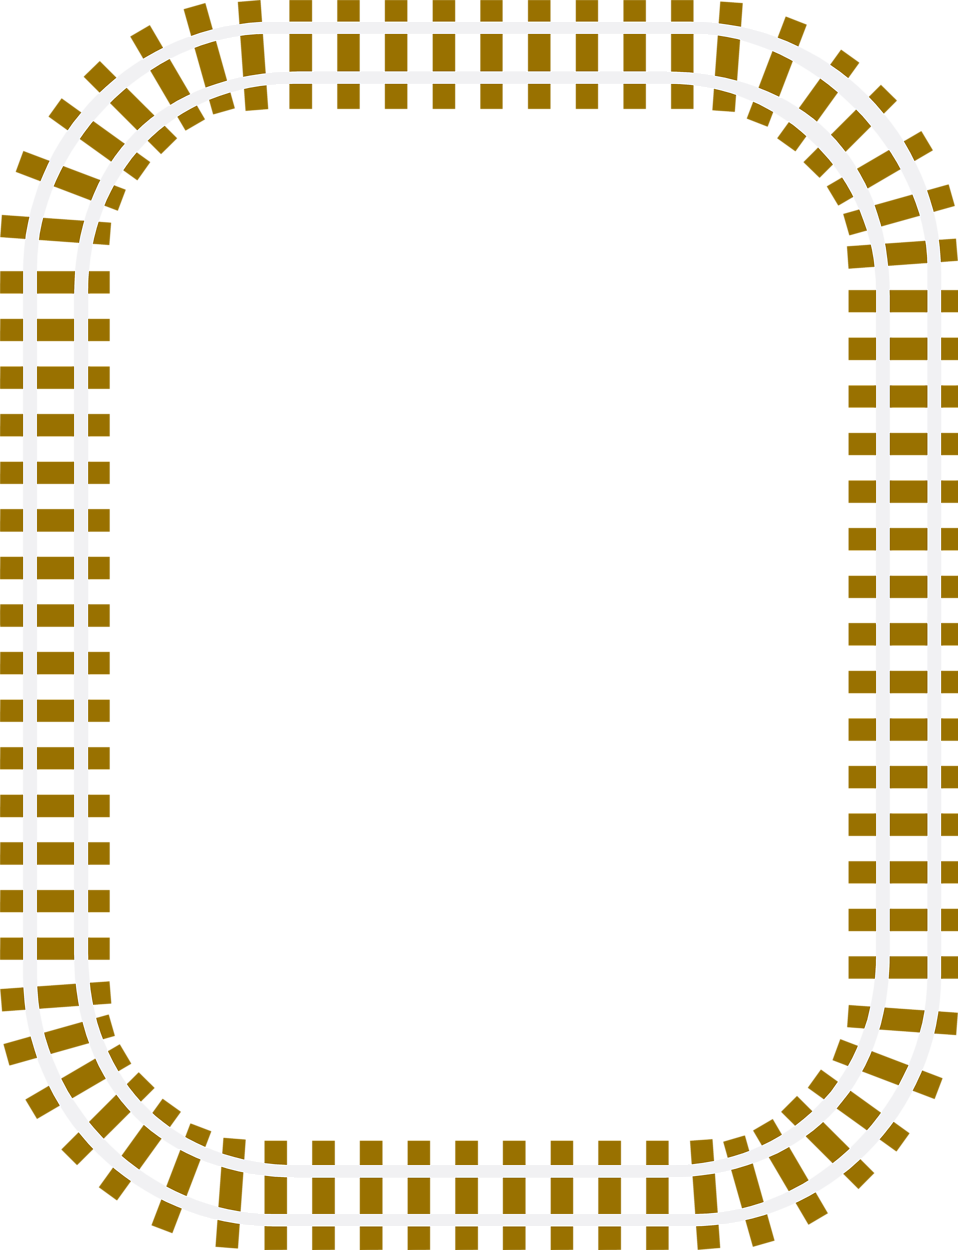 Clipboard clipart border. Illustration of a blank